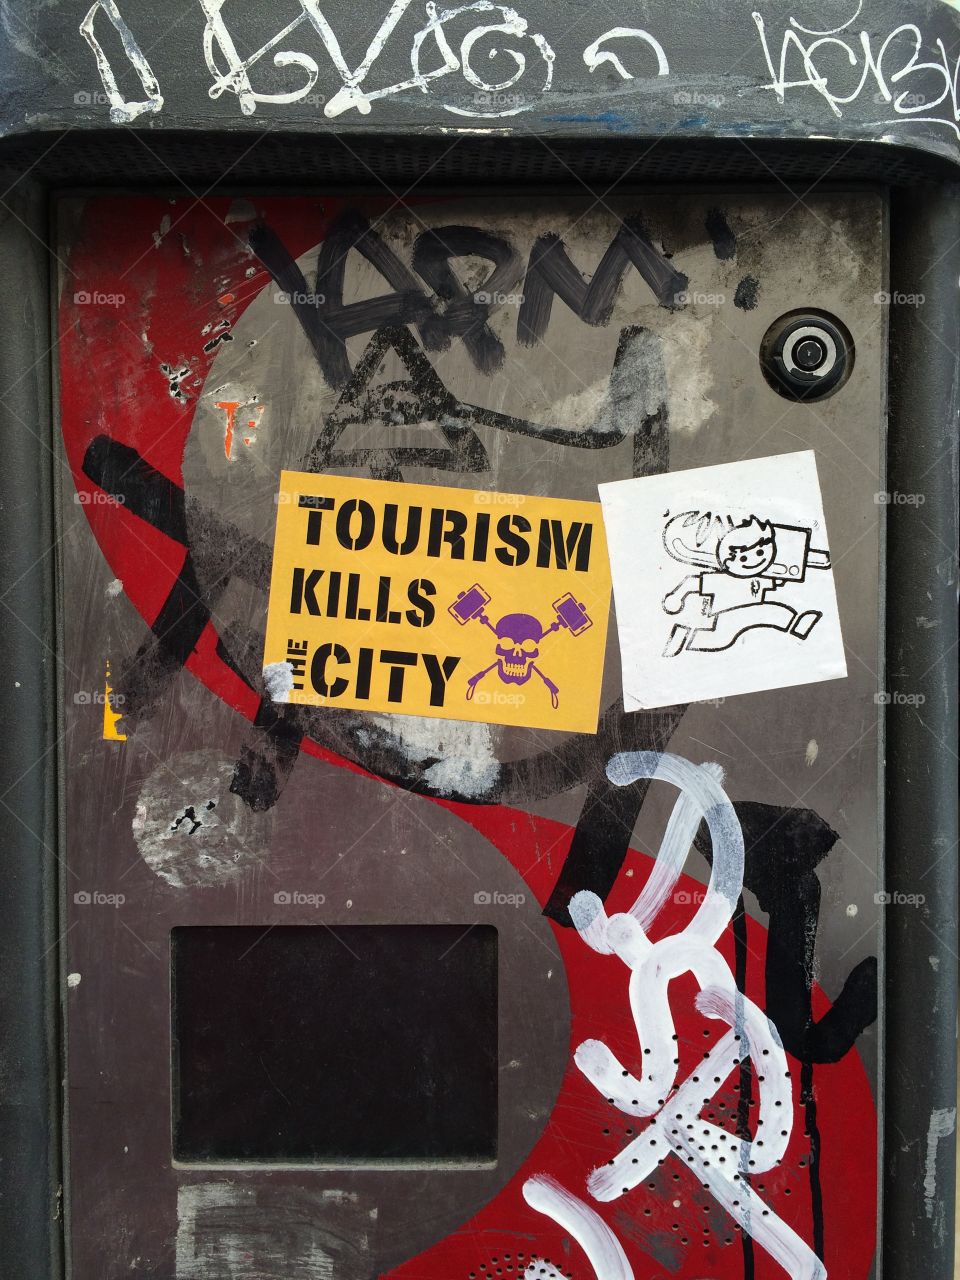 Barcelona  - Tourism Kills the City